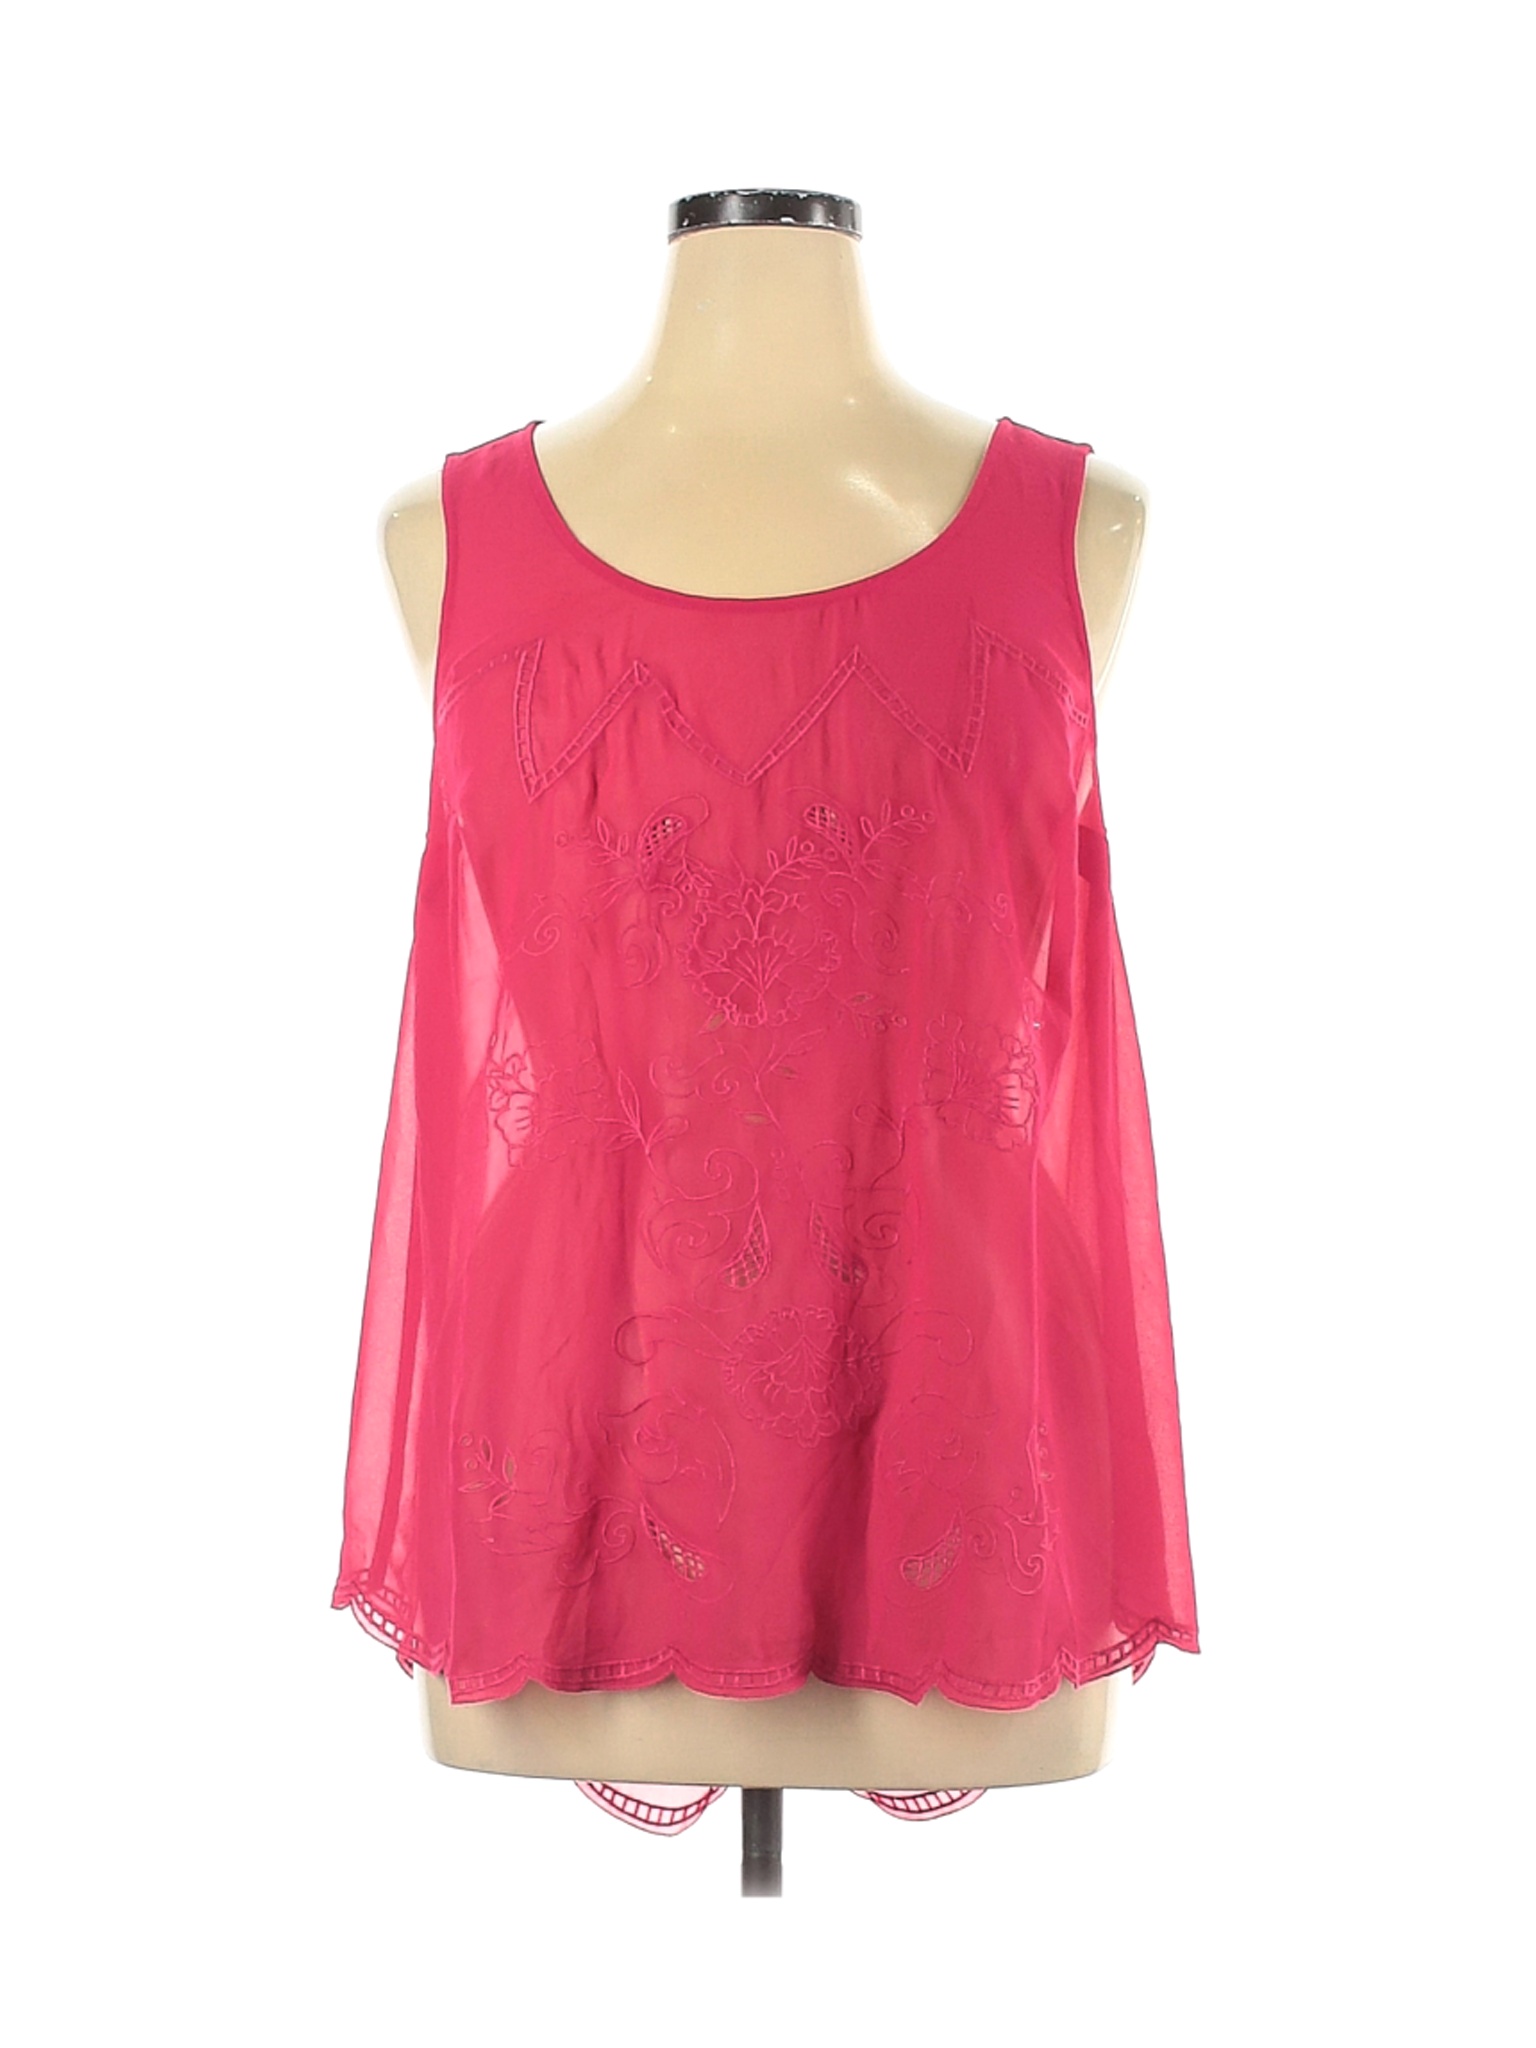 Torrid Women Pink Sleeveless Blouse 1X Plus | eBay